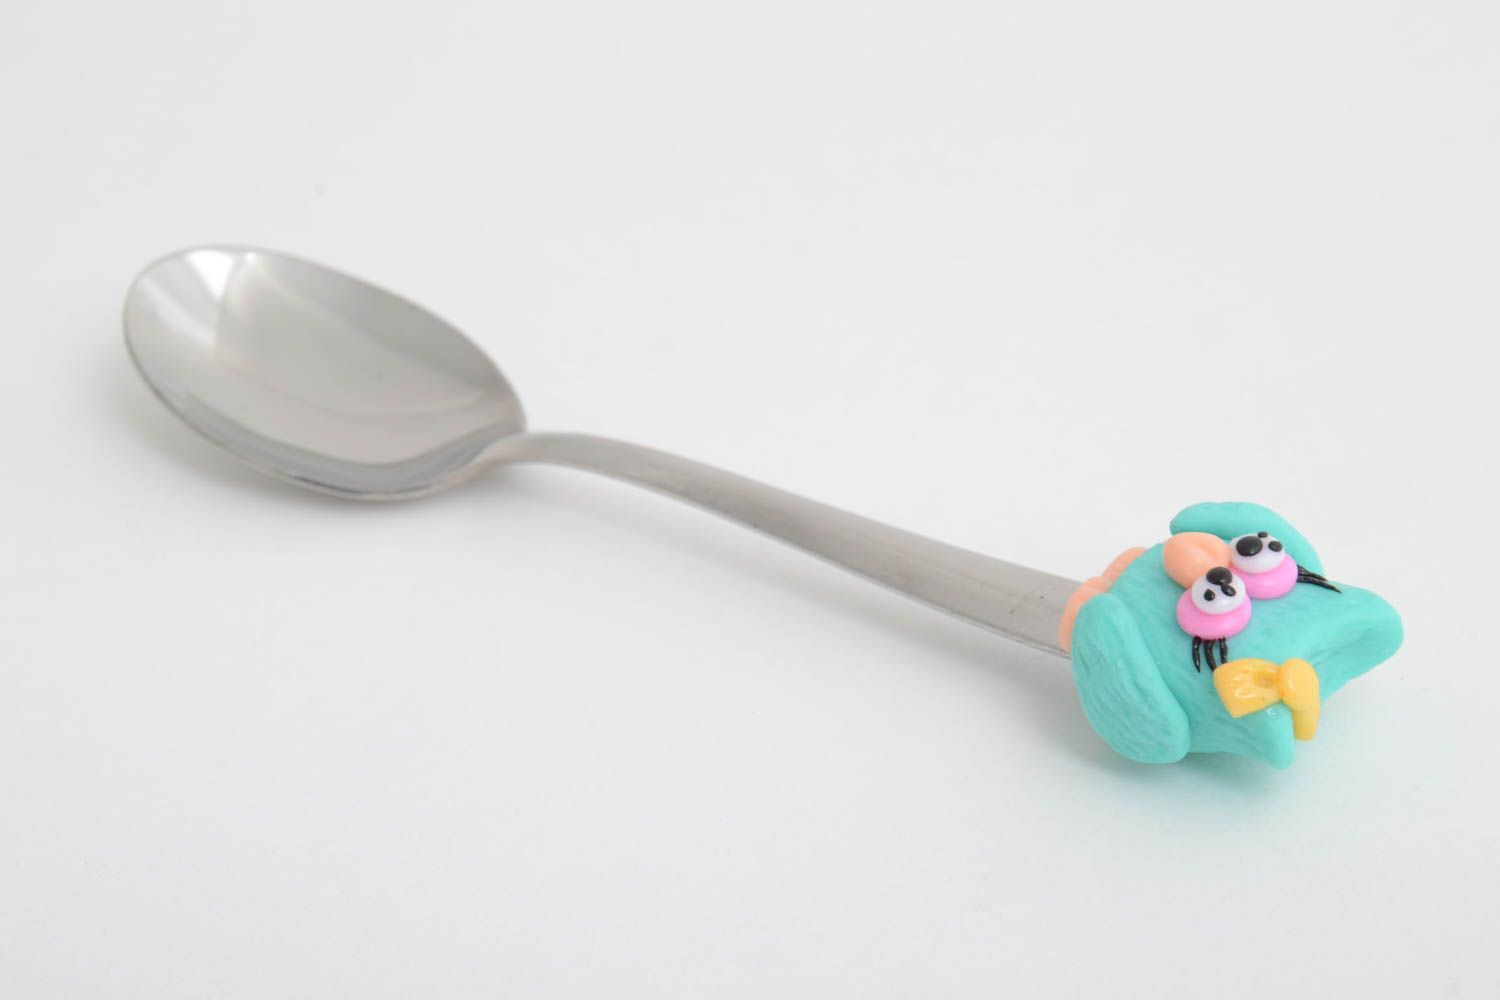 Handmade teaspoon unusual gift ideas decor kitchen utensils designer cutlery photo 2